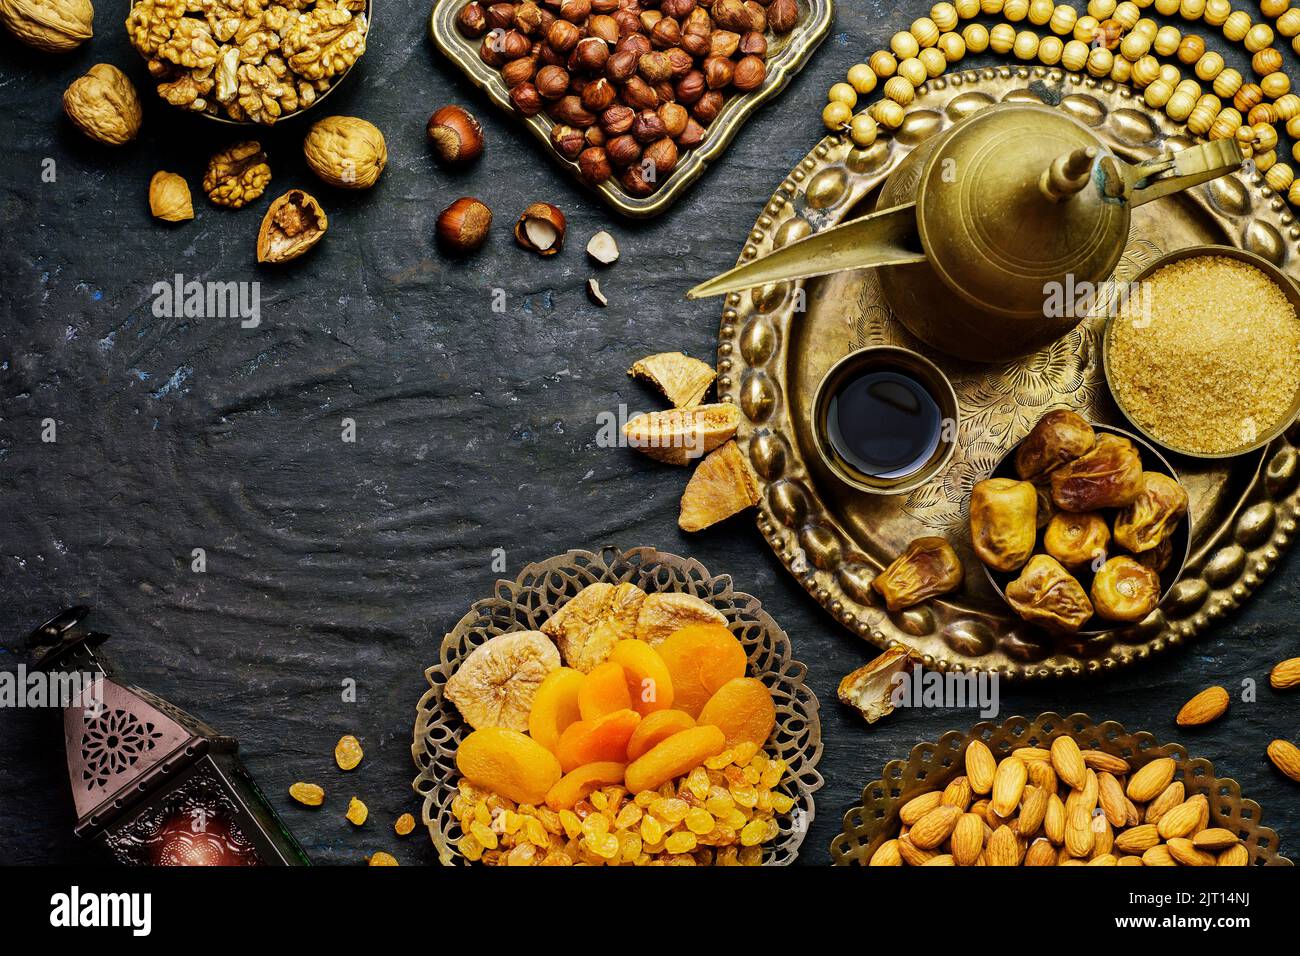 Ramadan concept. Varieties of dried fruits, nuts, Arabian coffee, dates and traditional Ramadan lantern on rustic dark background. Stock Photo